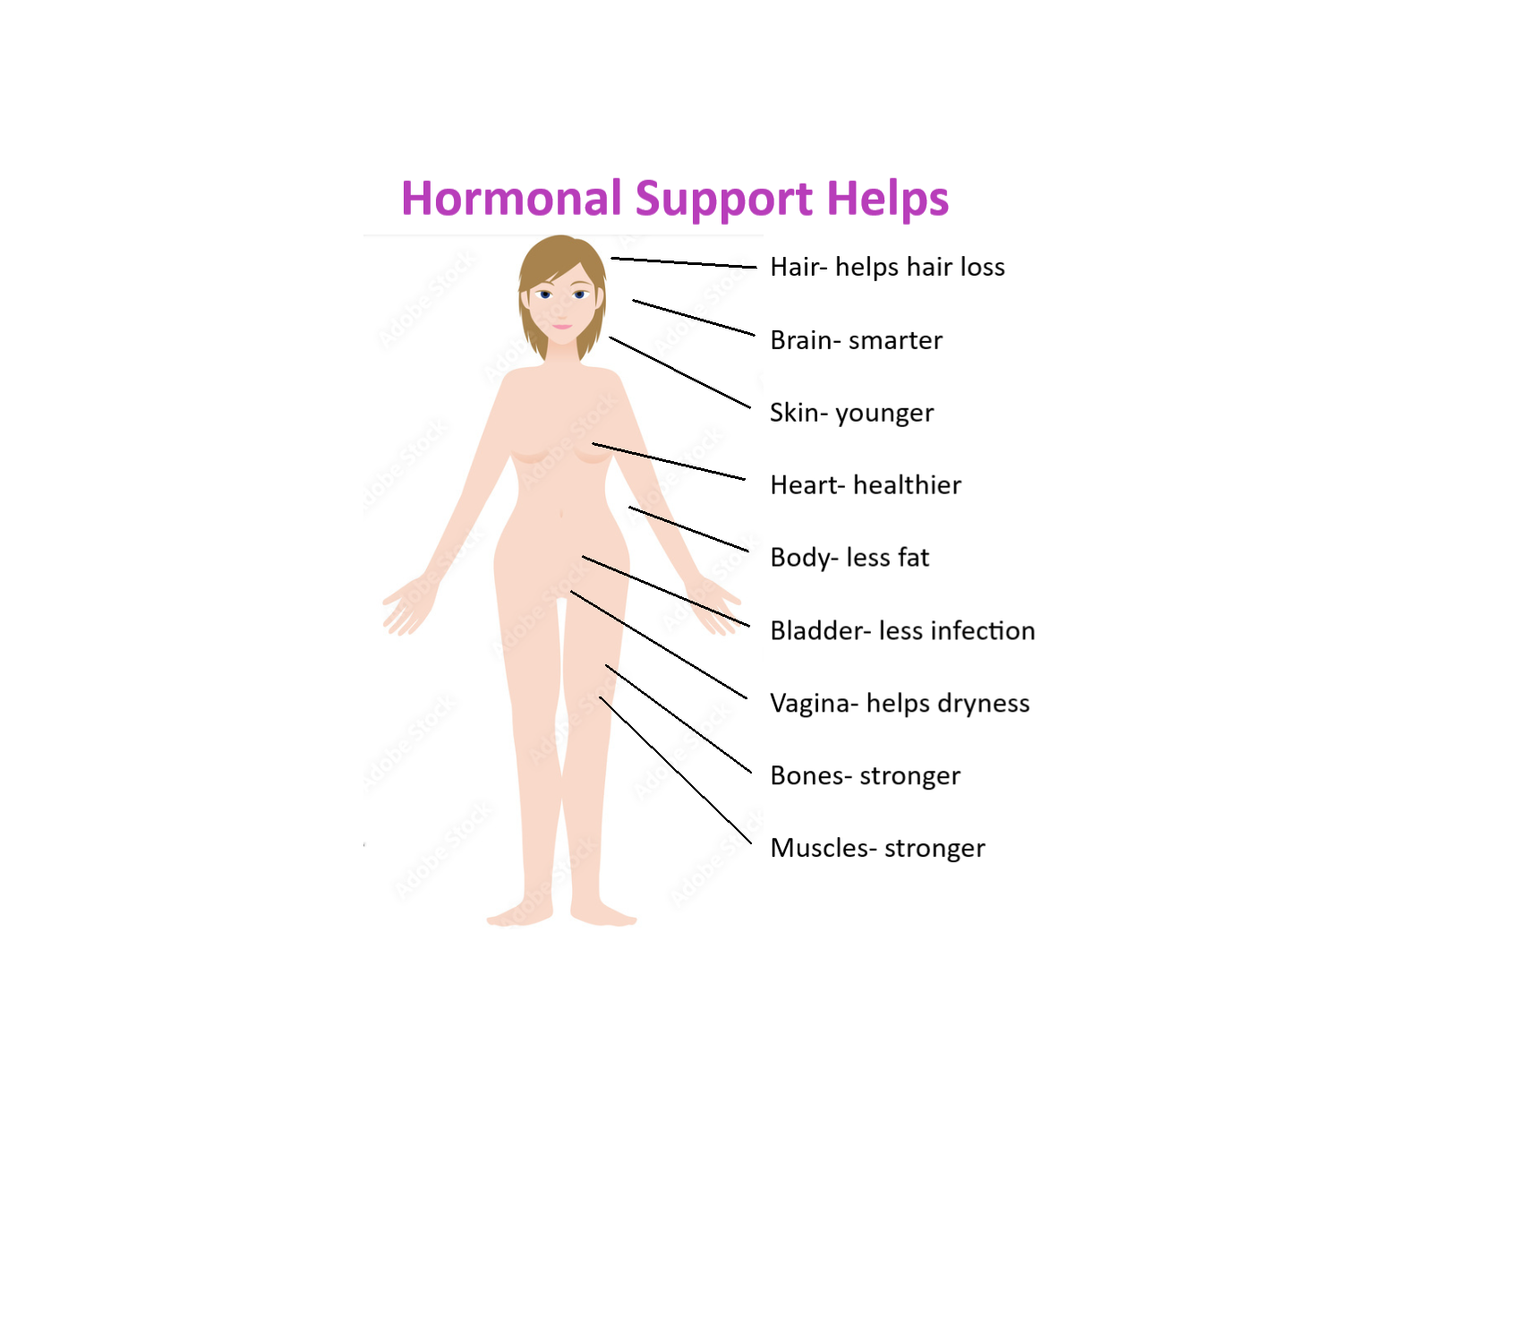 Benefits of Hormonal Support